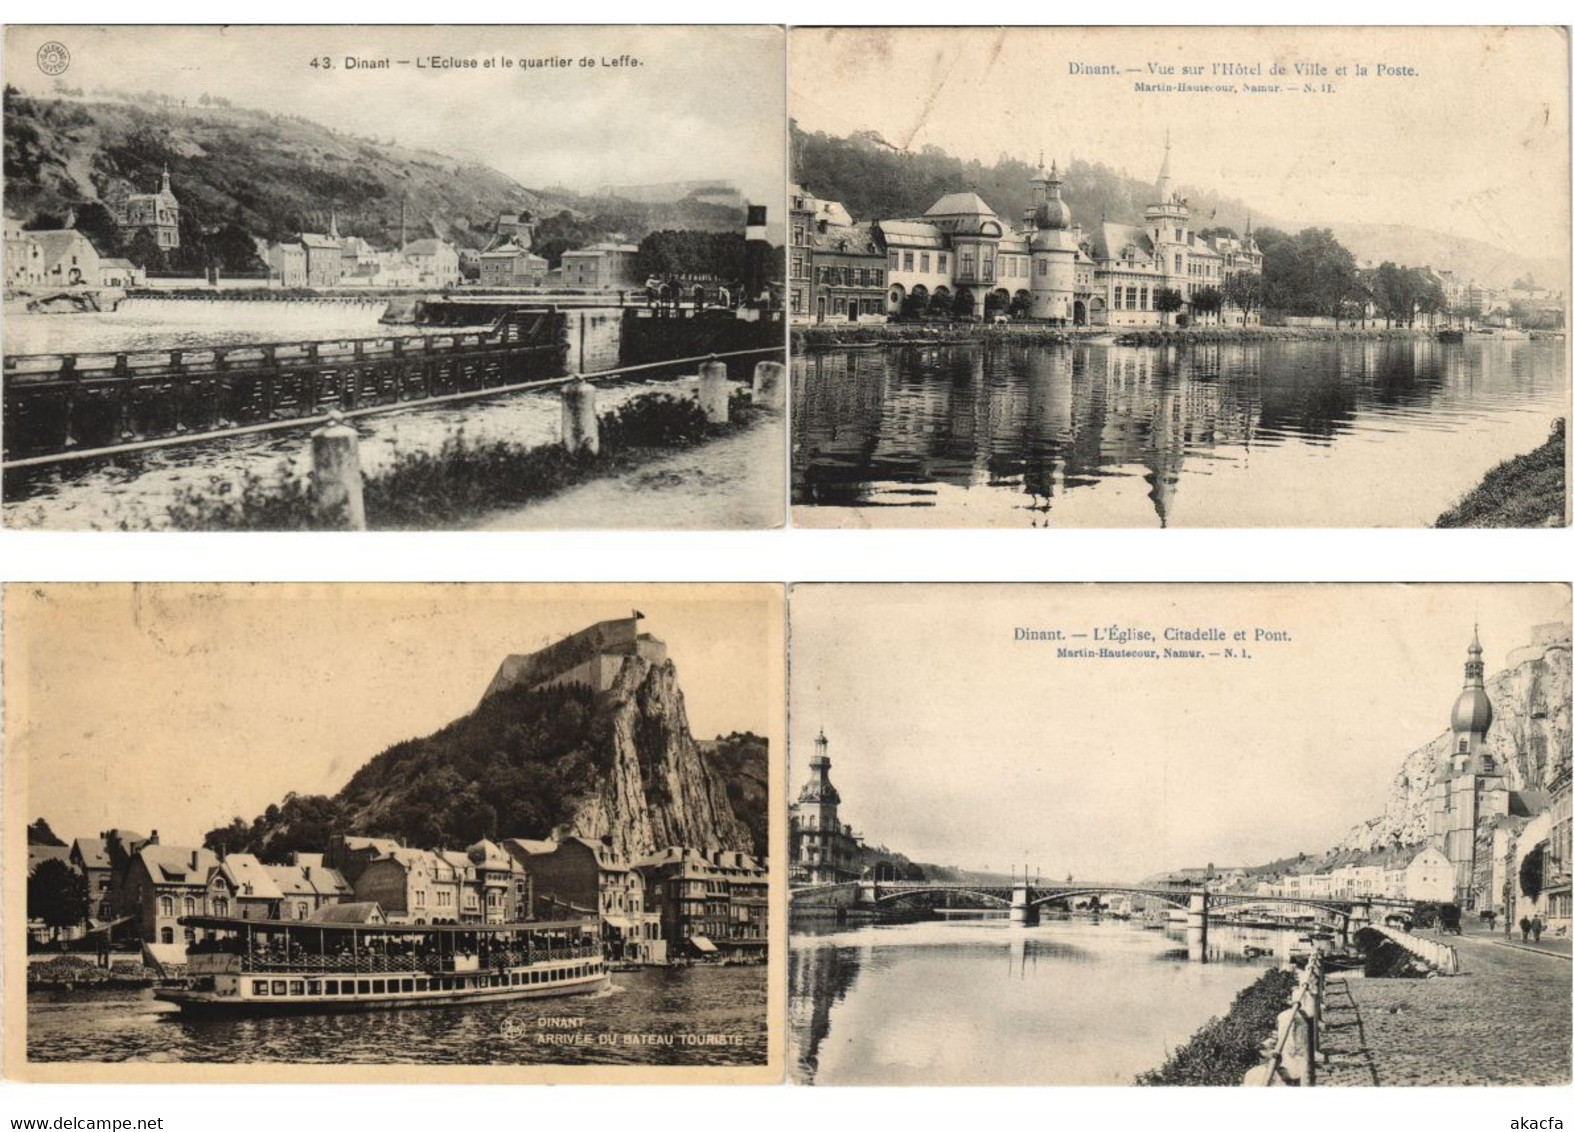 DNINANT BELGIUM 250 Vintage Postcards pre-1940 (L5242)